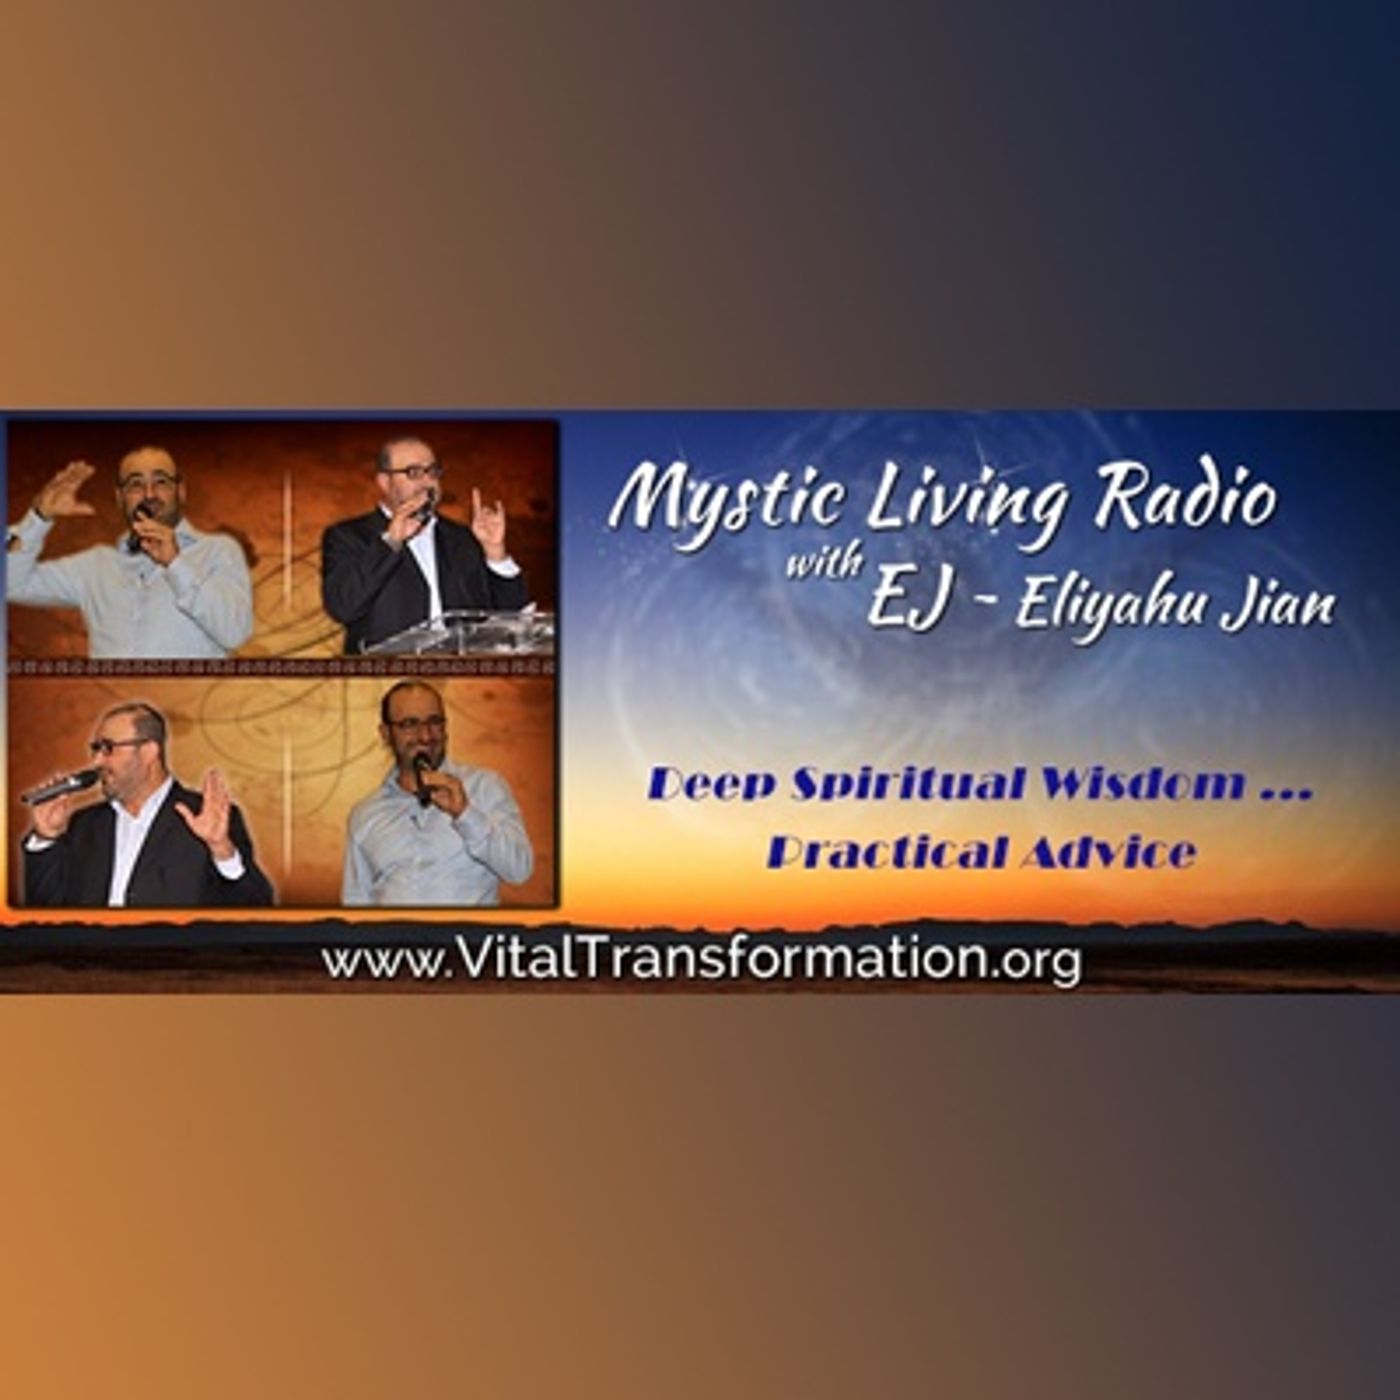 Mystic Living Radio with Eliyahu Jian